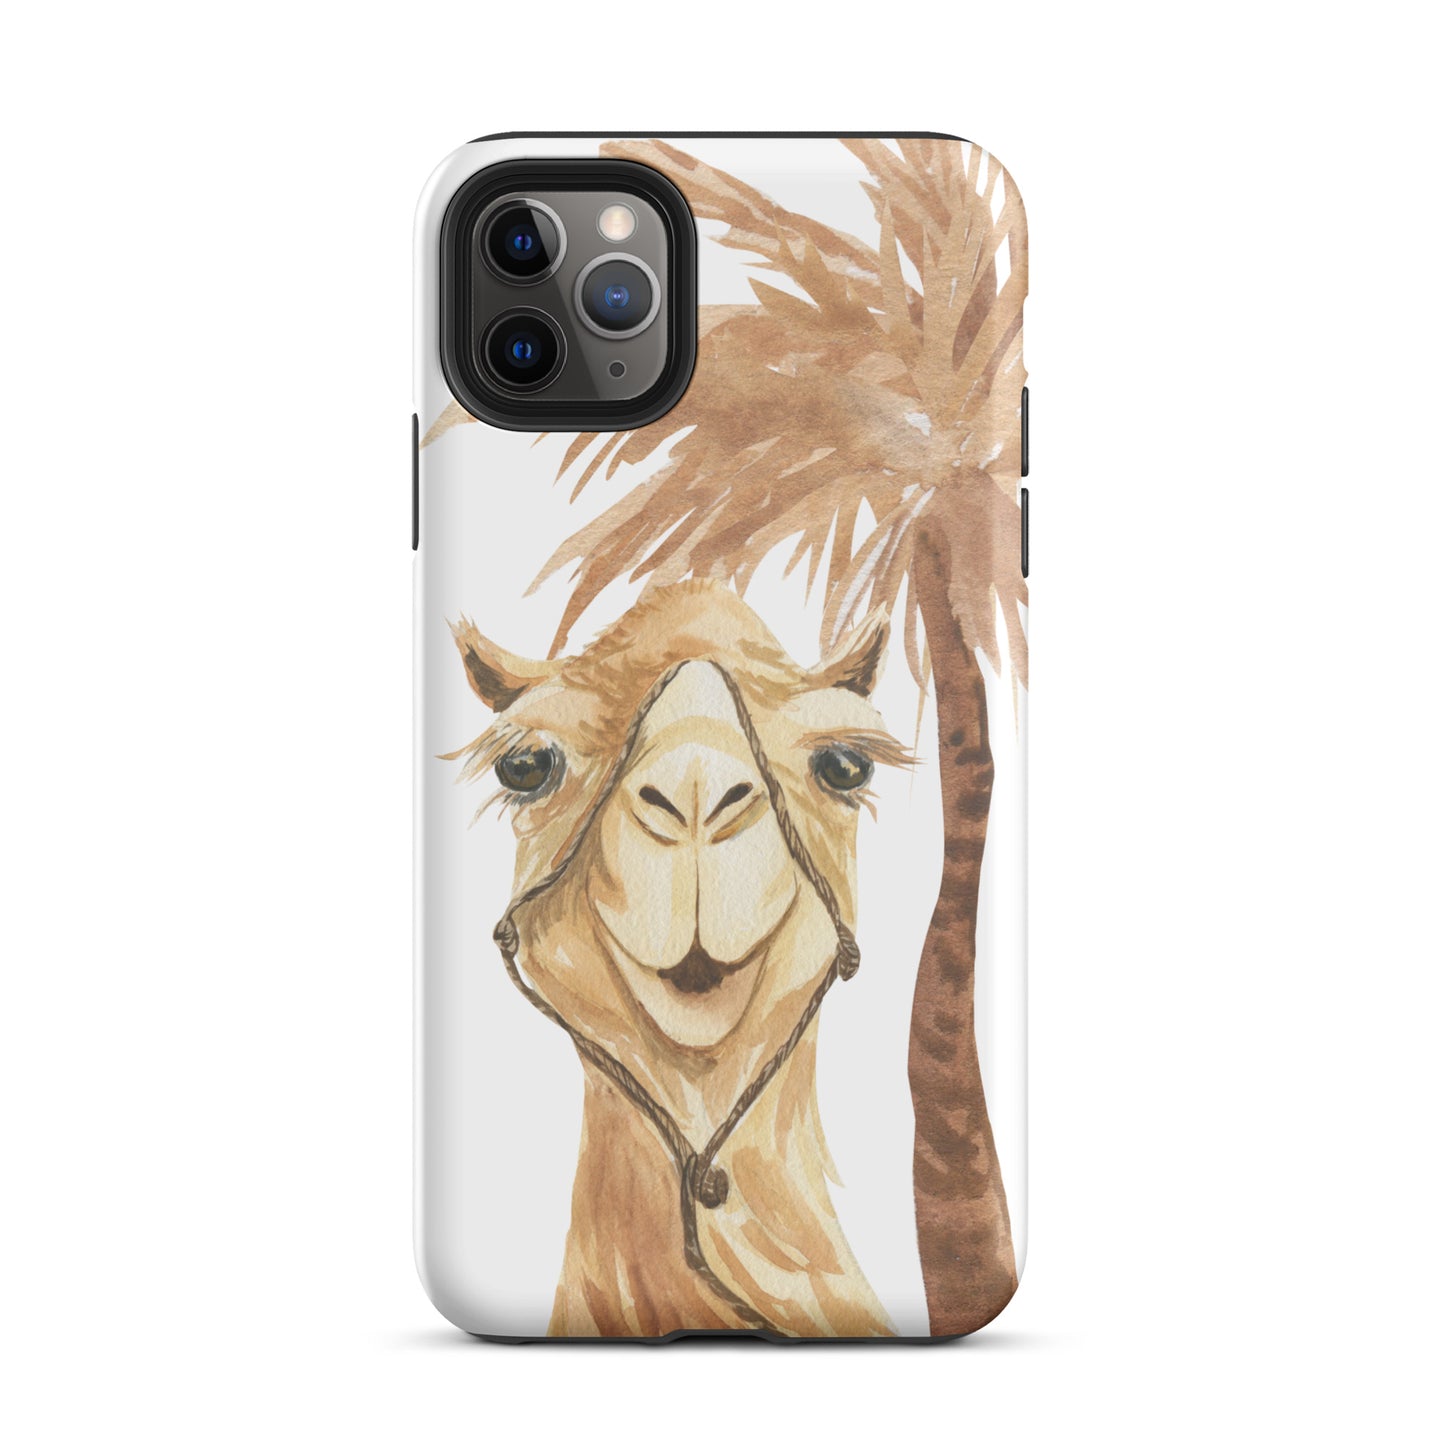 Moroccan Desert Camel iPhone Case